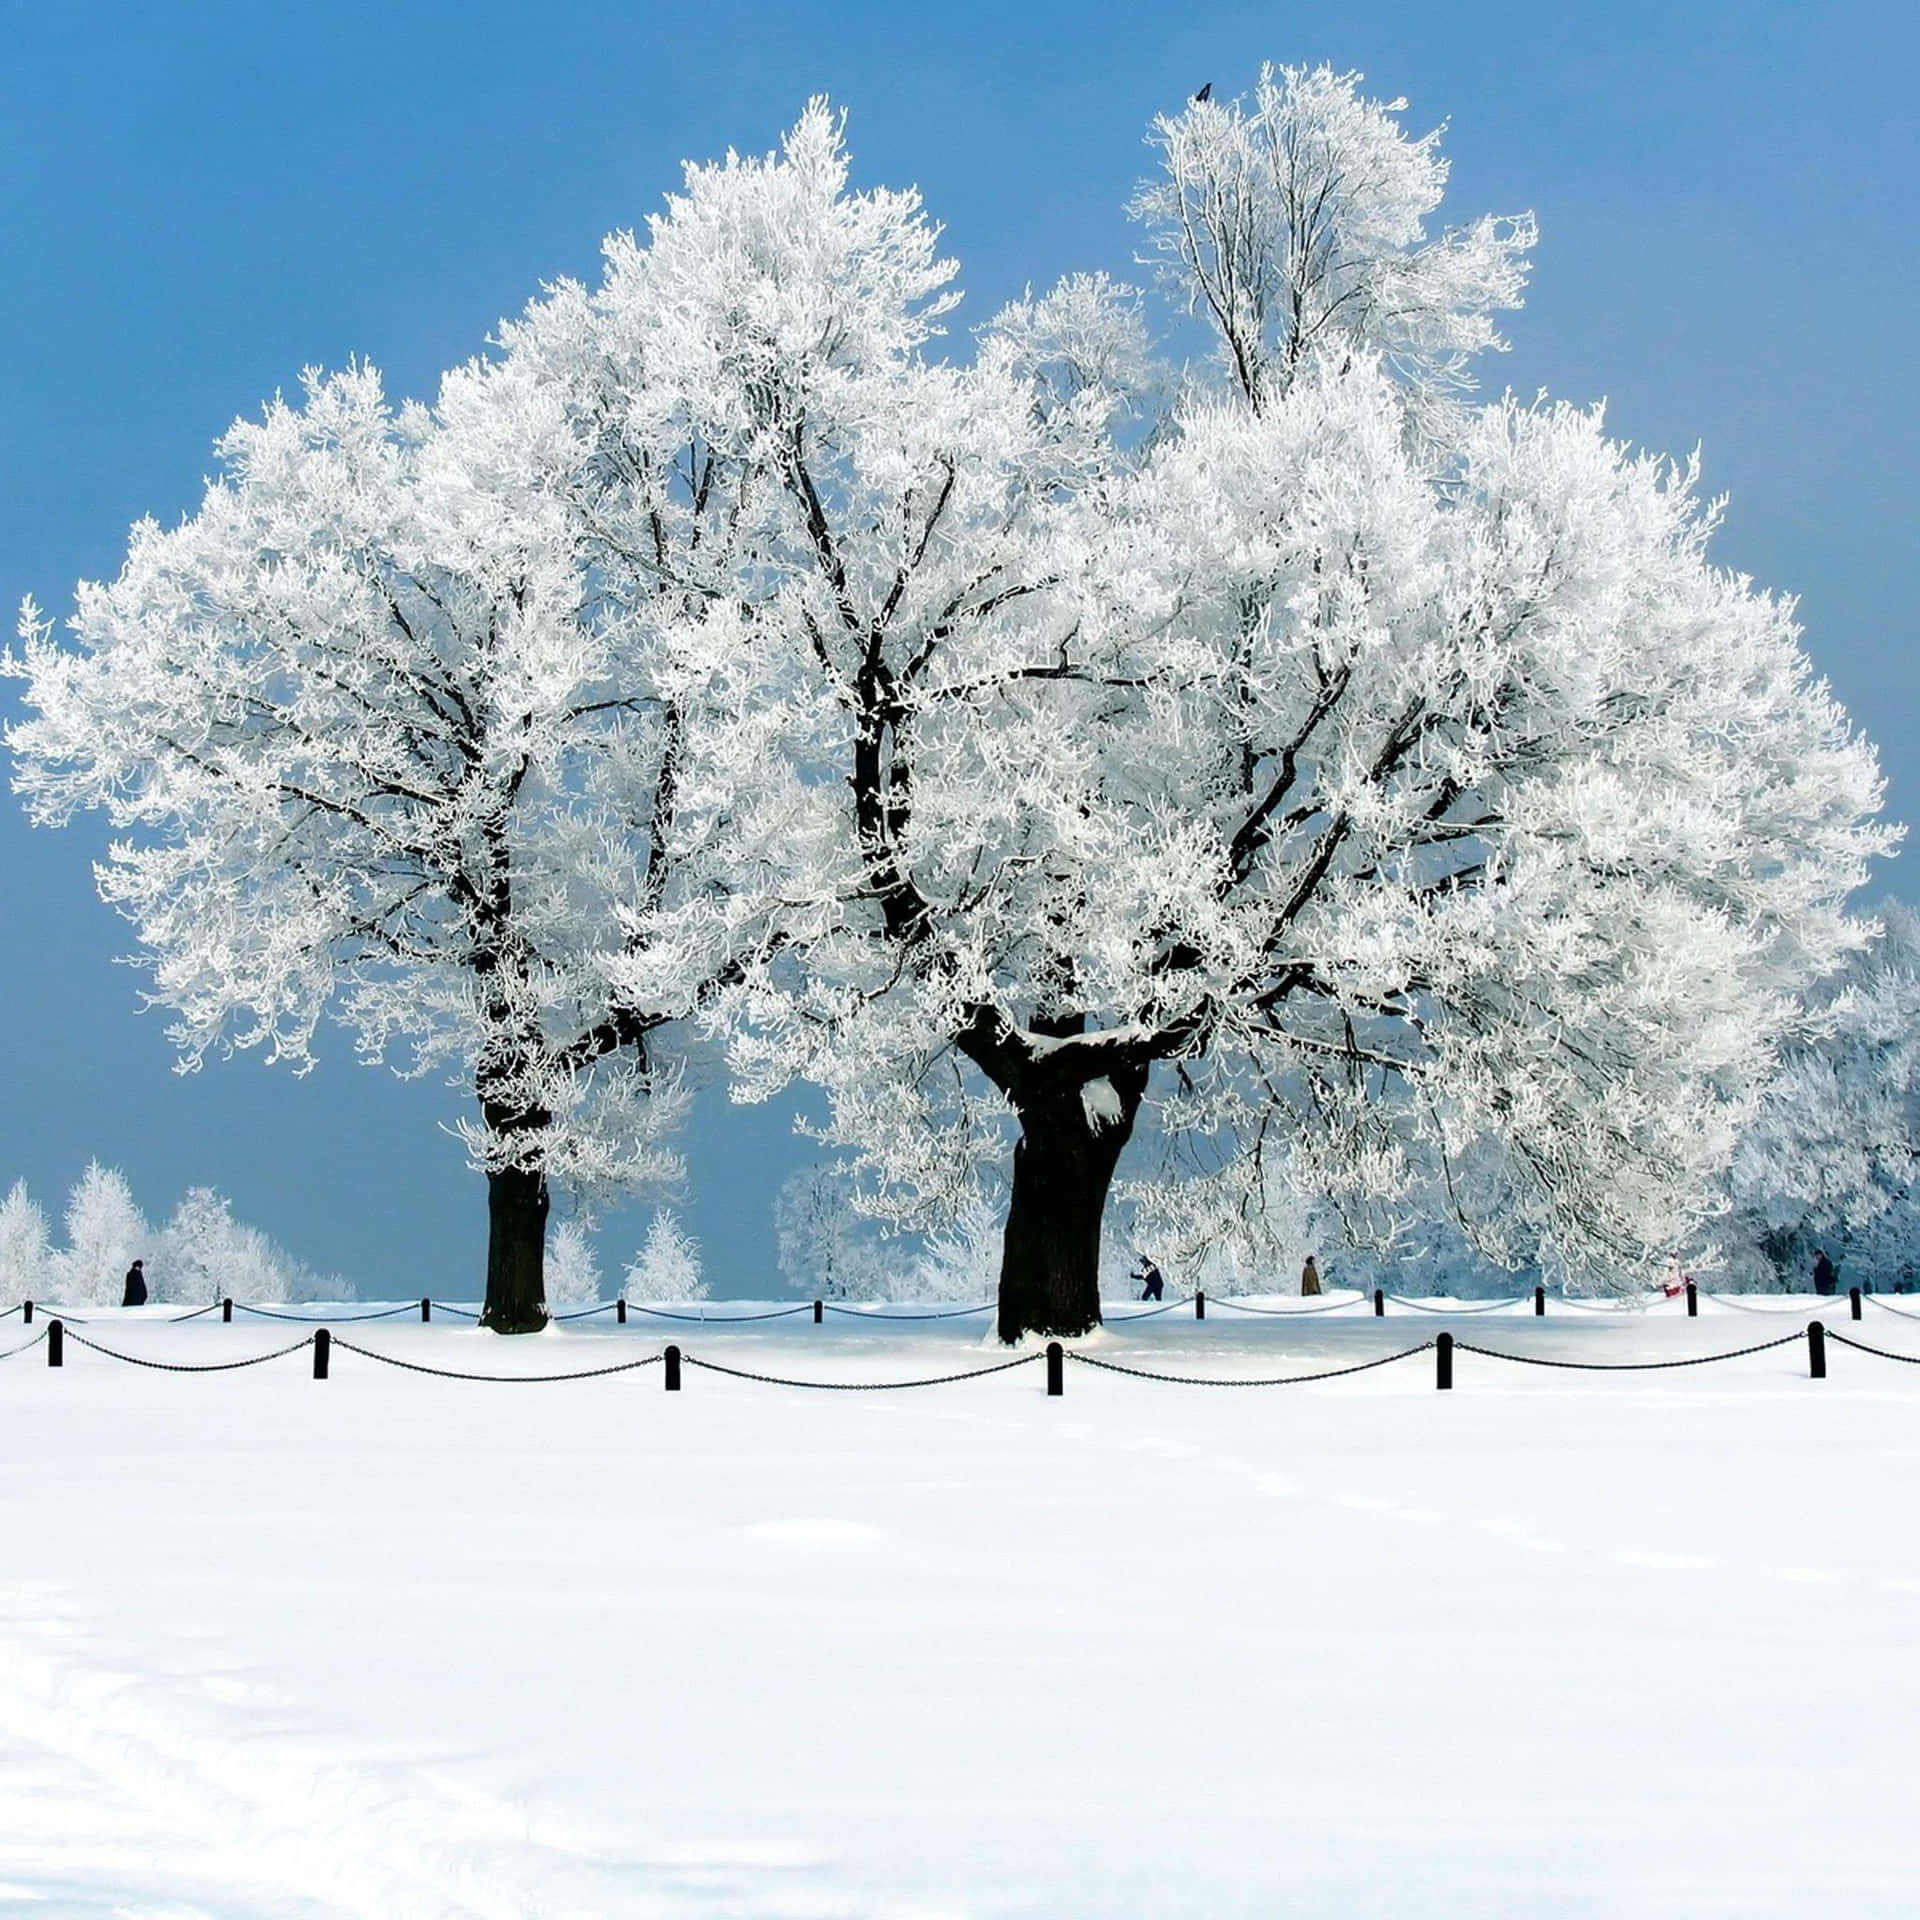 Winter Wonderland - Enjoy Breathtaking Views of a Snowy Mountain